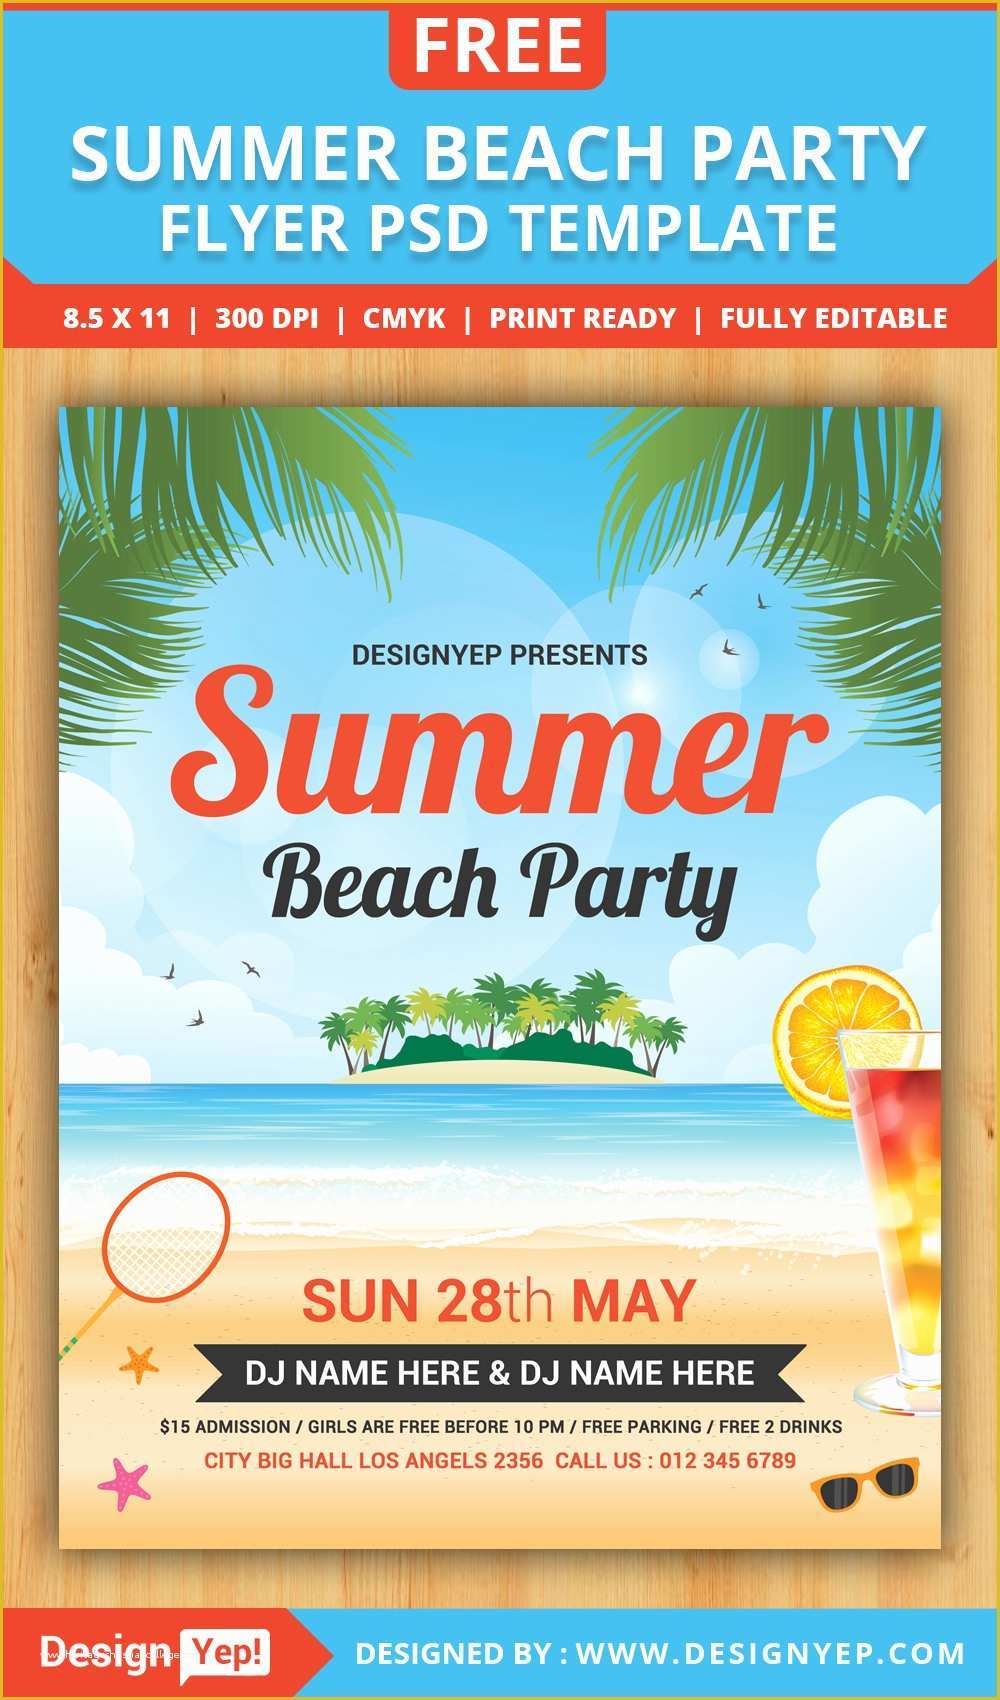 Free Flier Templates Of Free Summer Beach Party Flyer Psd Template Designyep